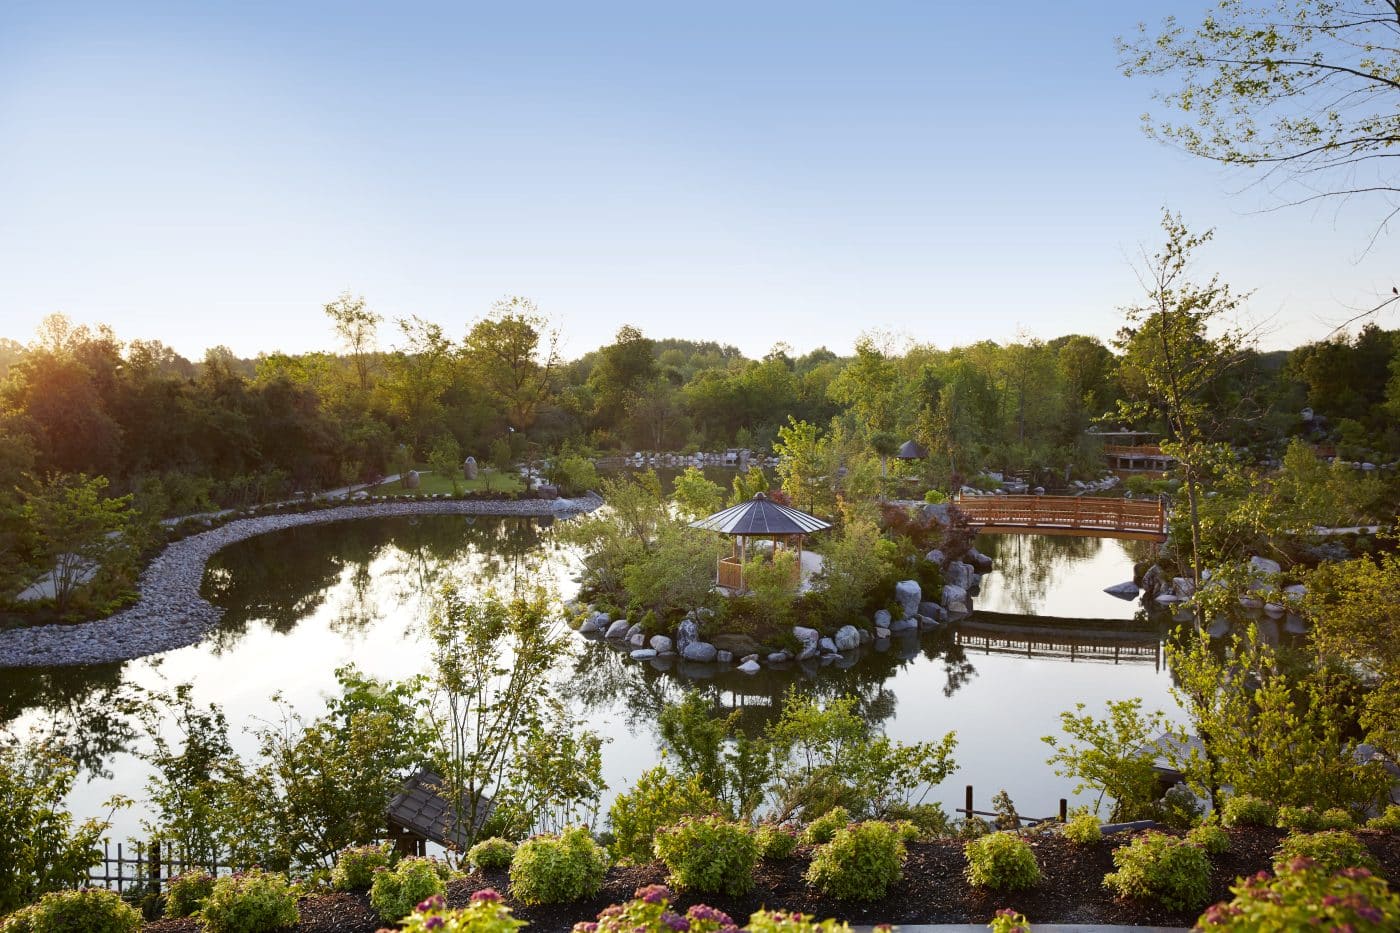 Frederik Meijier Gardens and Sculpture Park Grand Rapids, Michigan Japanese Garden pond bridge pagoda tea house